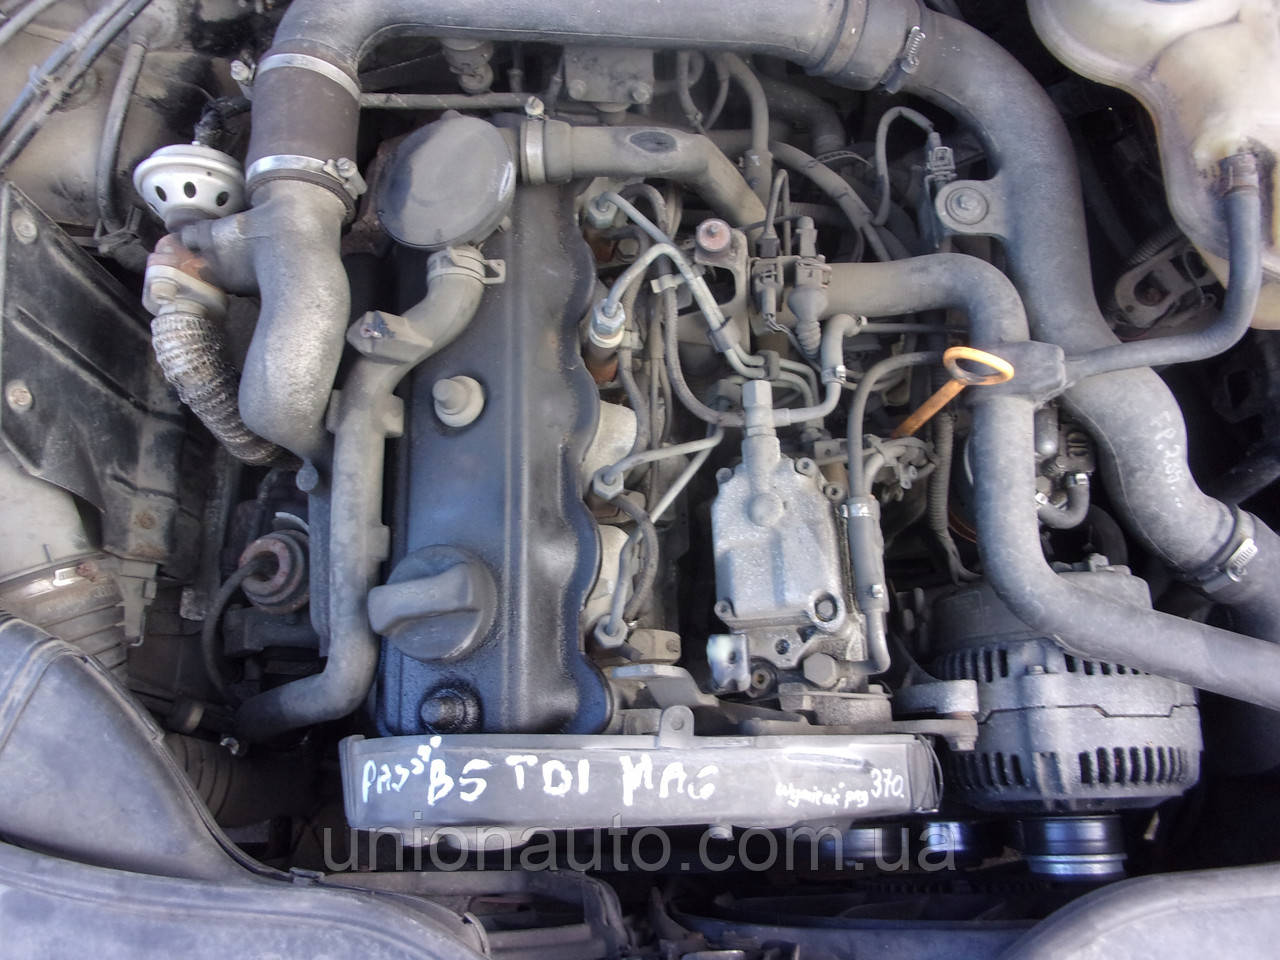 Б5 дизель. VW AFN 1.9 TDI. AFN 1.9 TDI 1999 Passat патрубок интеркулер. Passat b5 1.9 TDI. Помпа AFN 1.9 TDI.